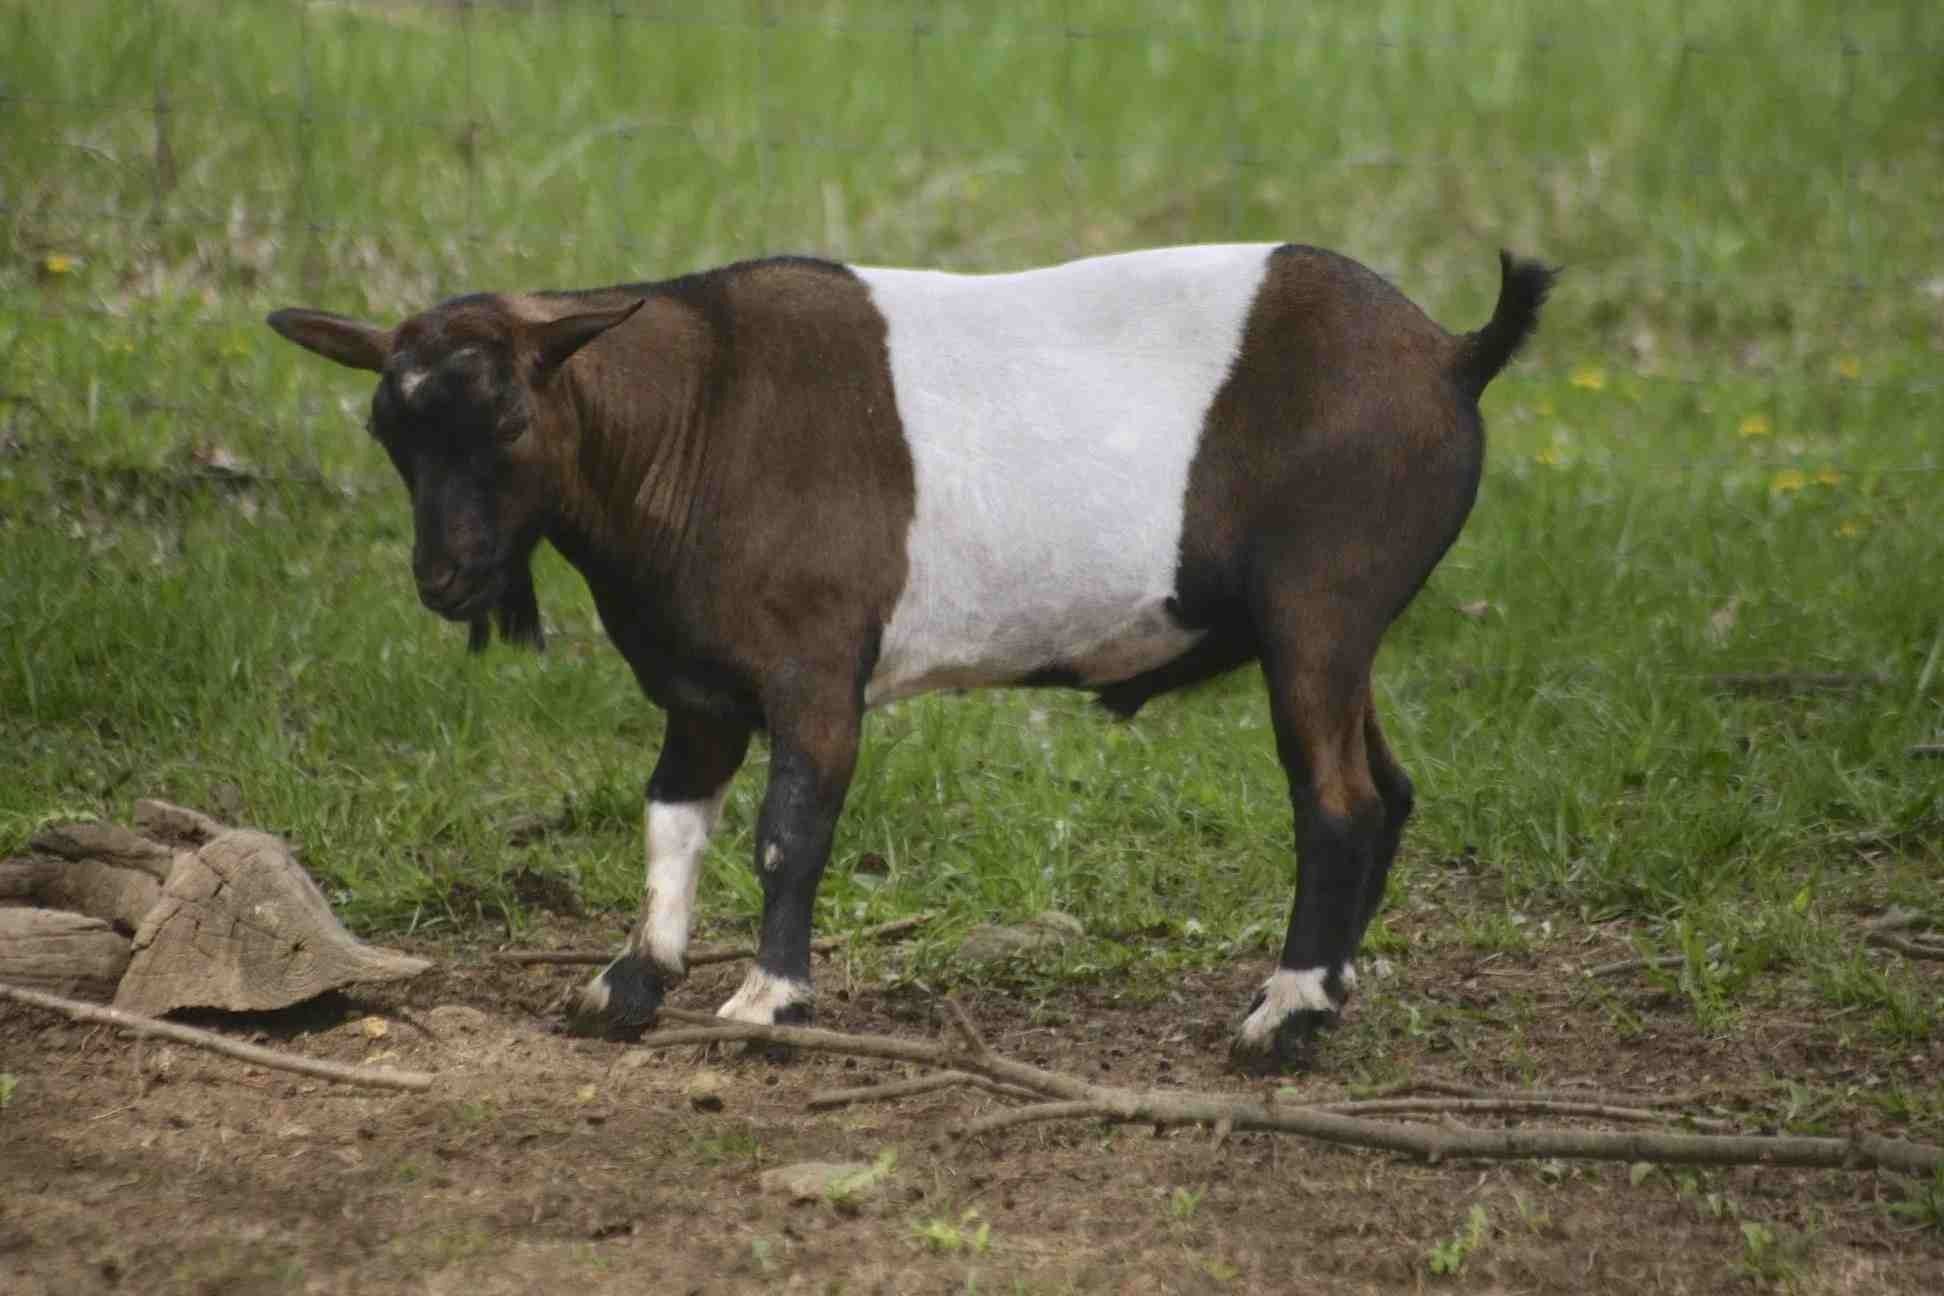 A Fainting Goat on a field.